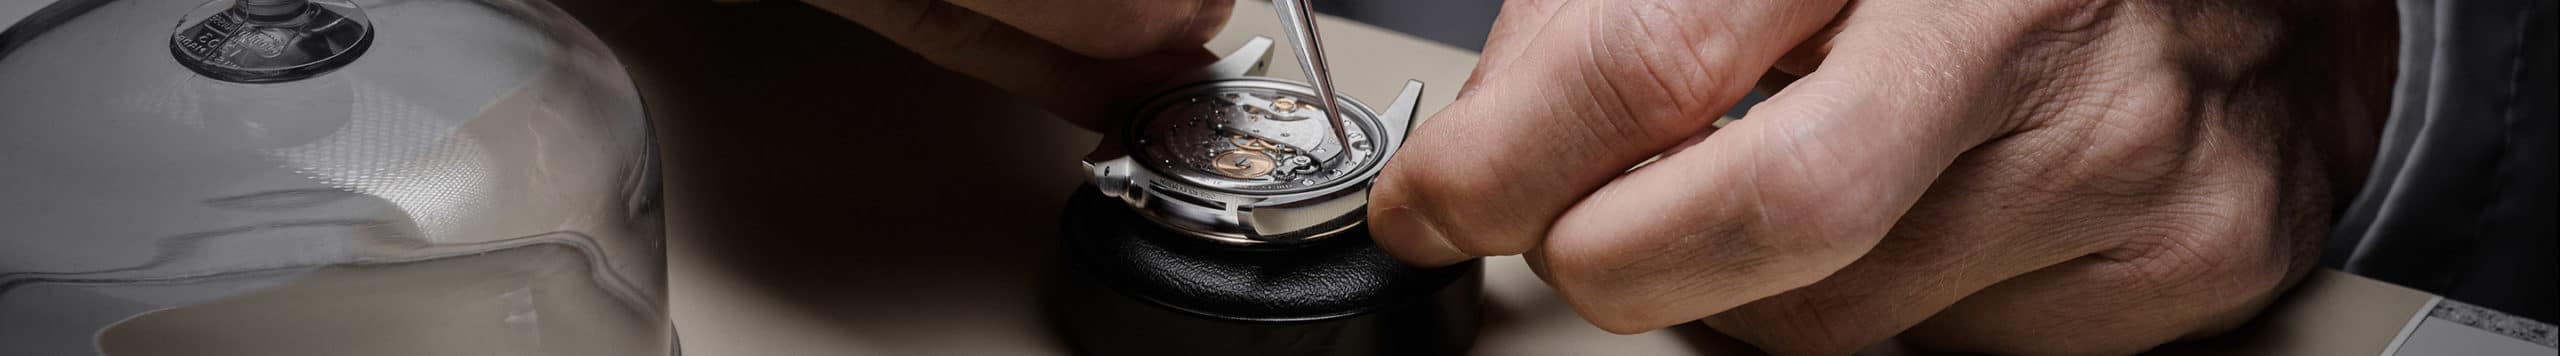 Rolex Servicing your Rolex | Rolex Official Retailer - The Time Place Singapore